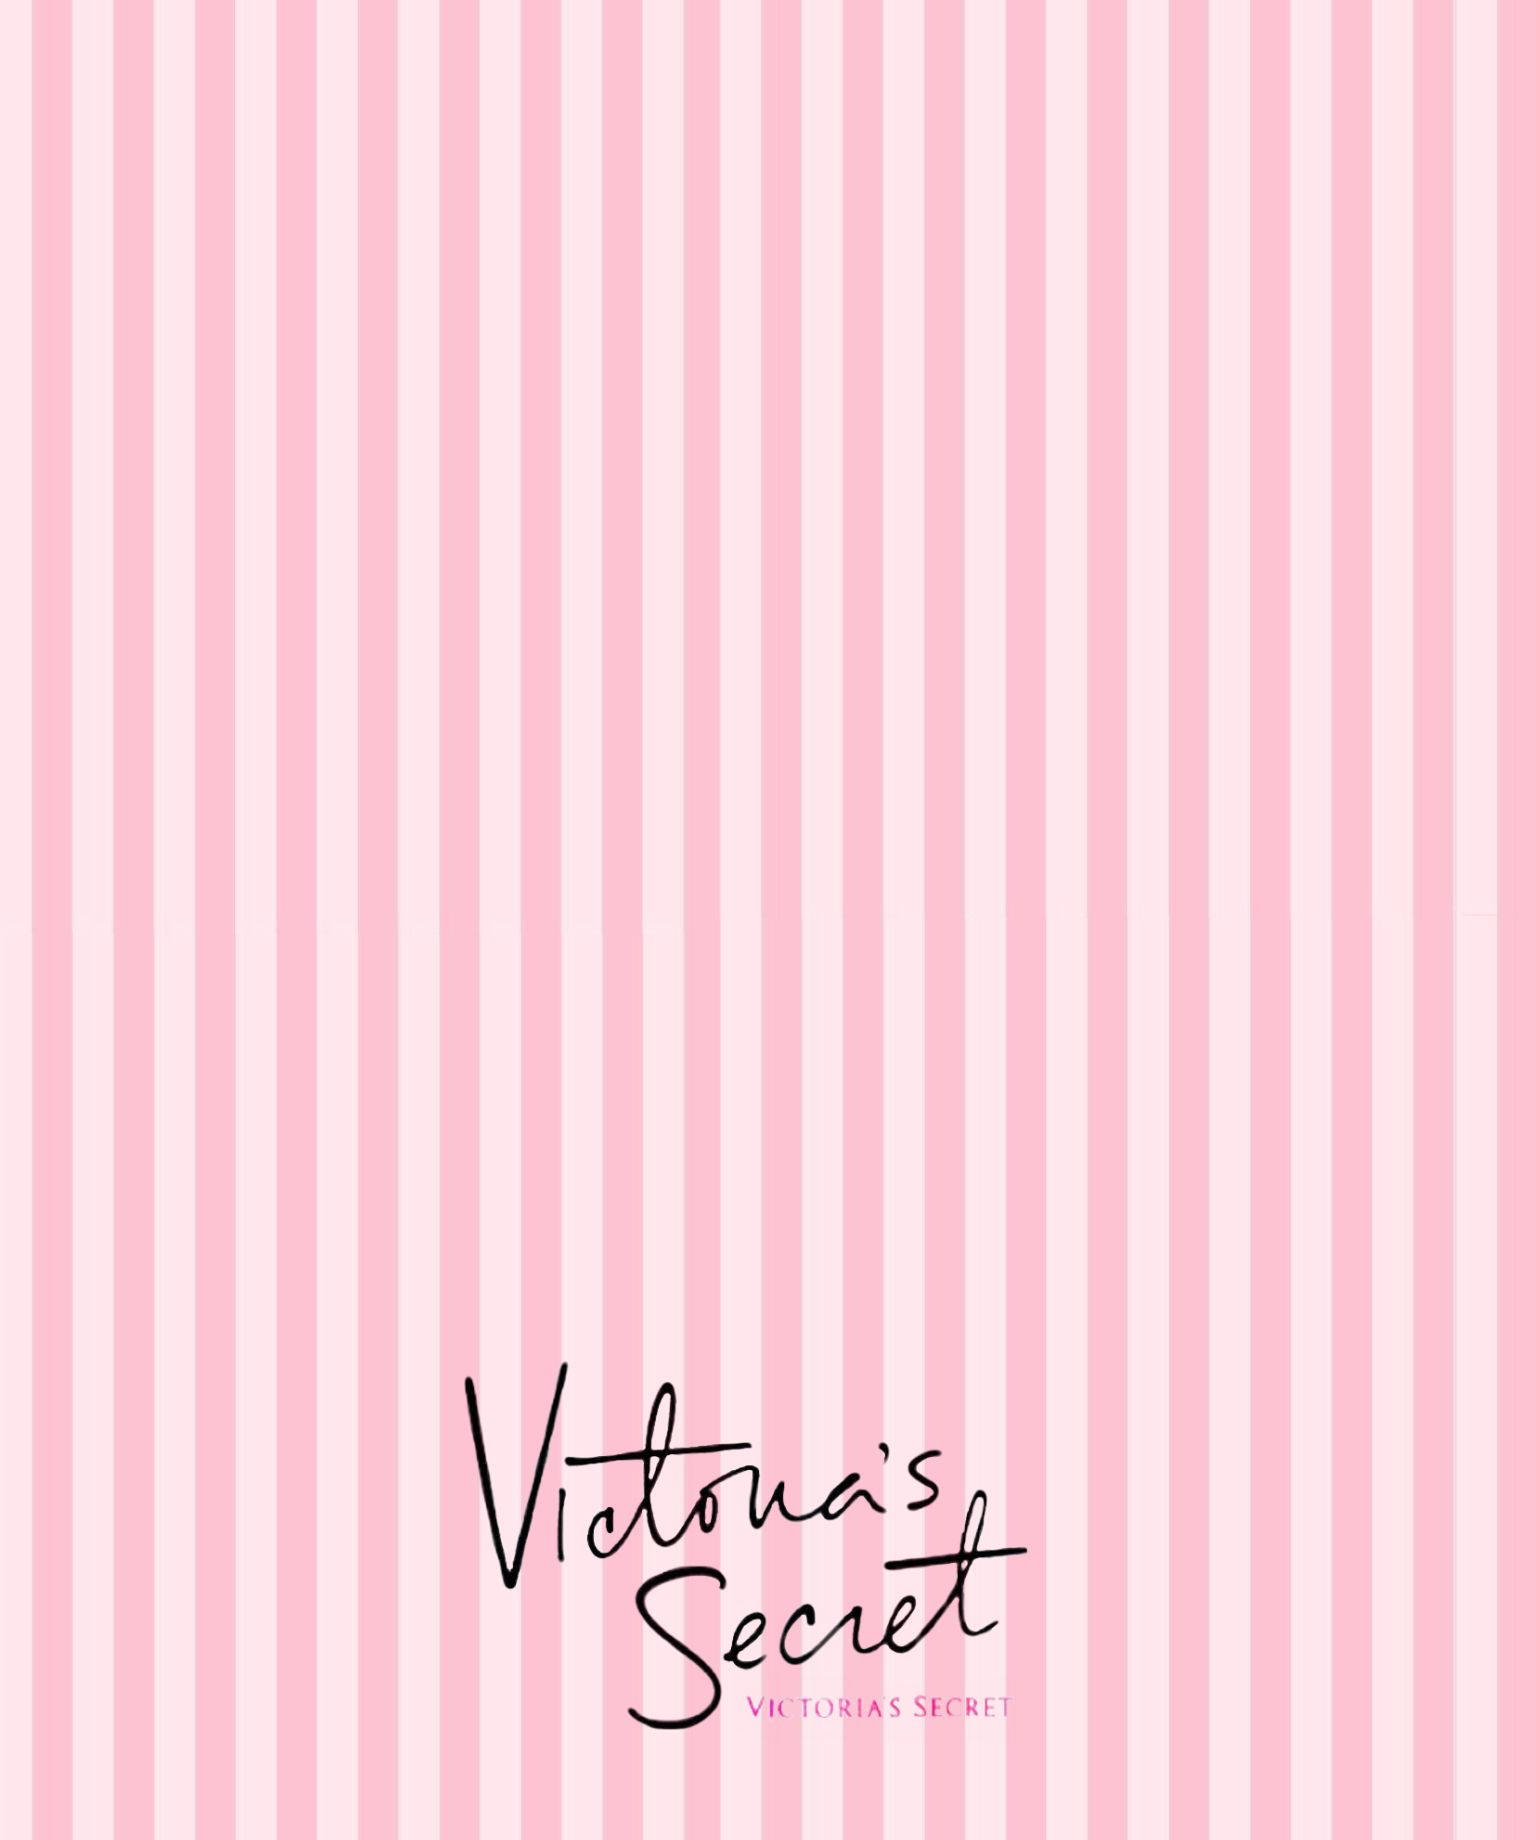 Victoria Secret 1536X1840 Wallpaper and Background Image